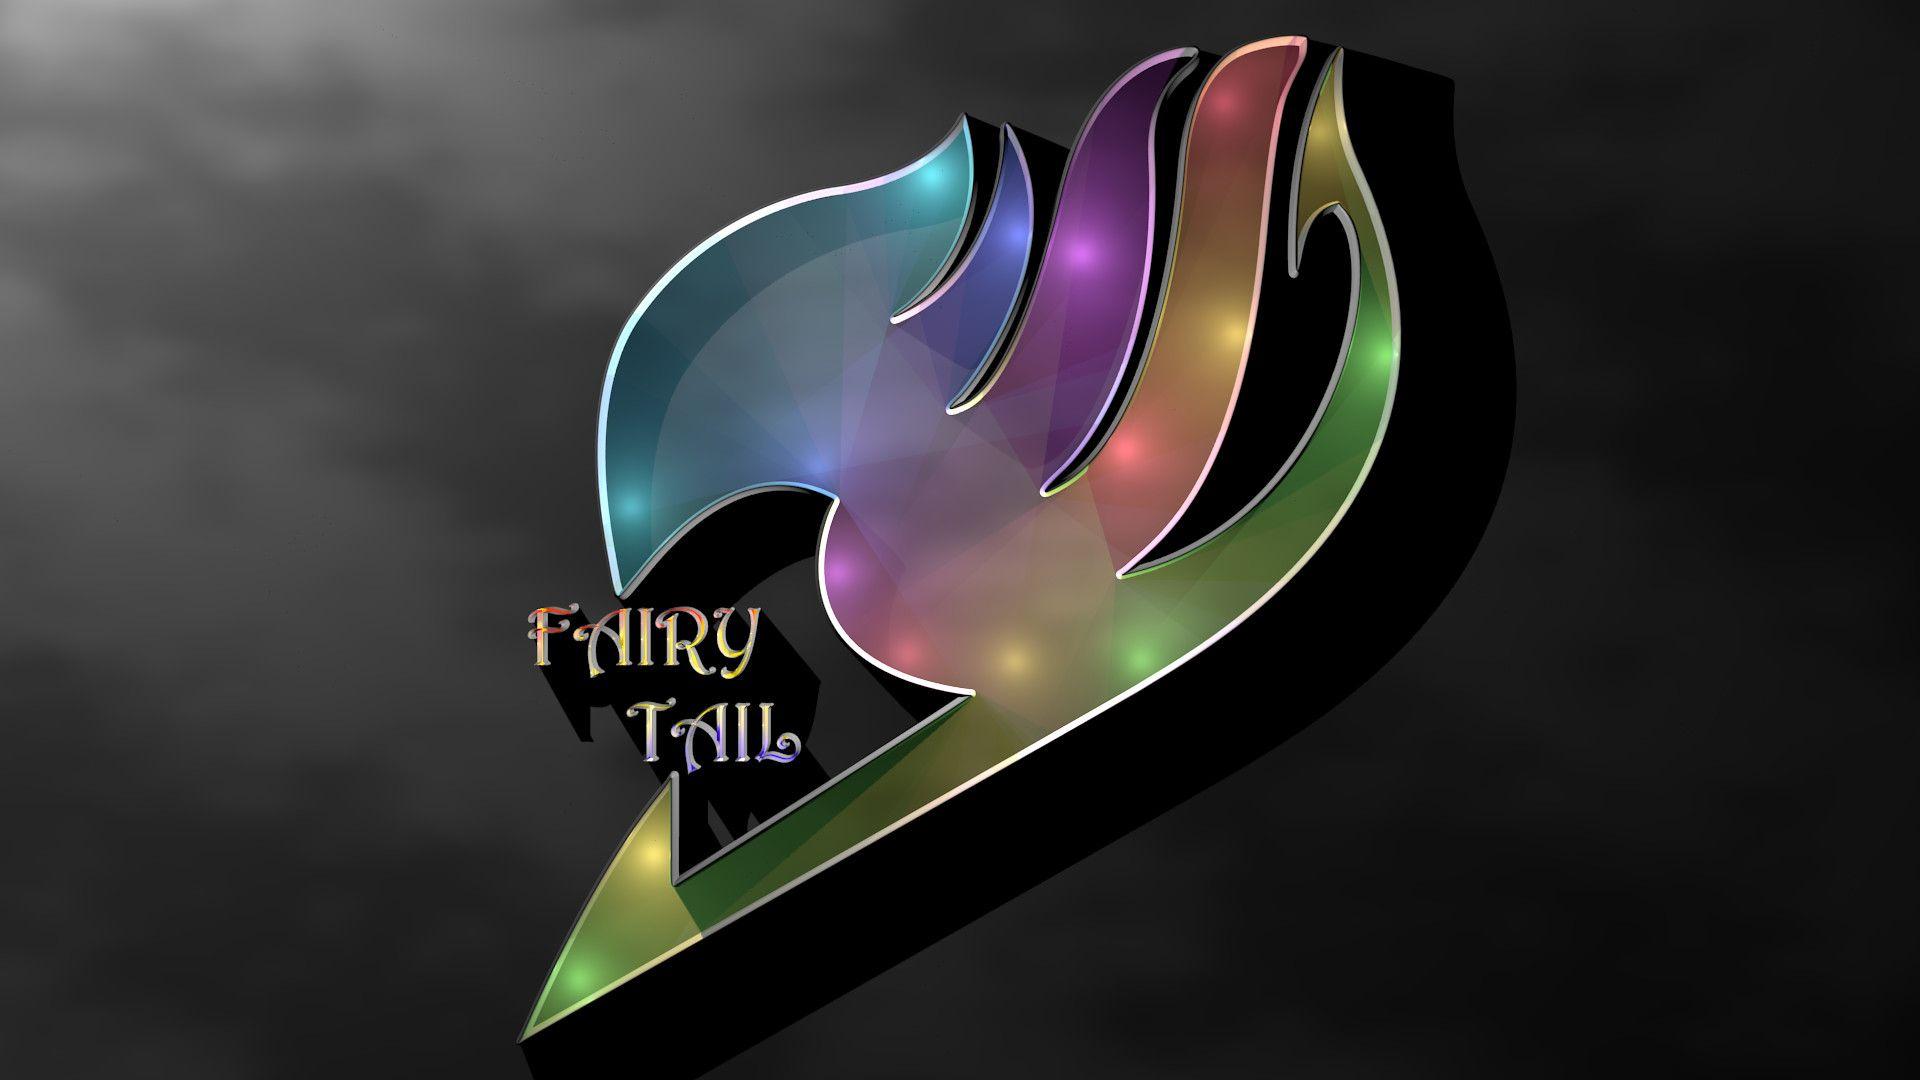 Fairy Tail Anime Logo Wallpapers Top Free Fairy Tail Anime Logo